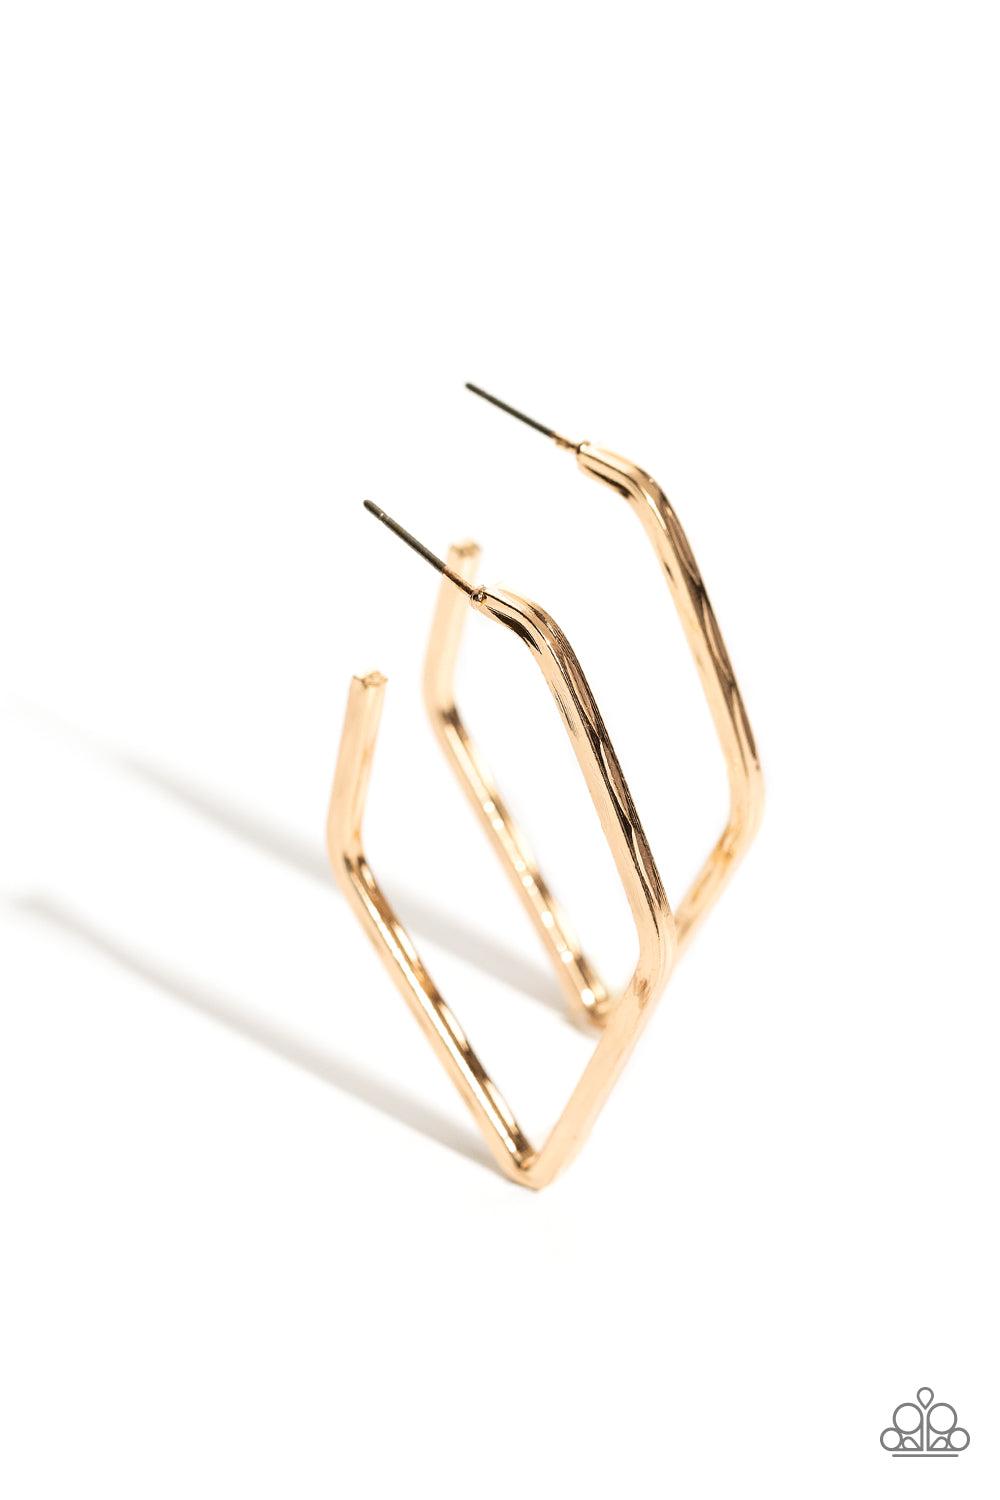 Winning Edge Gold Hoop Earrings - Paparazzi Accessories- lightbox - CarasShop.com - $5 Jewelry by Cara Jewels